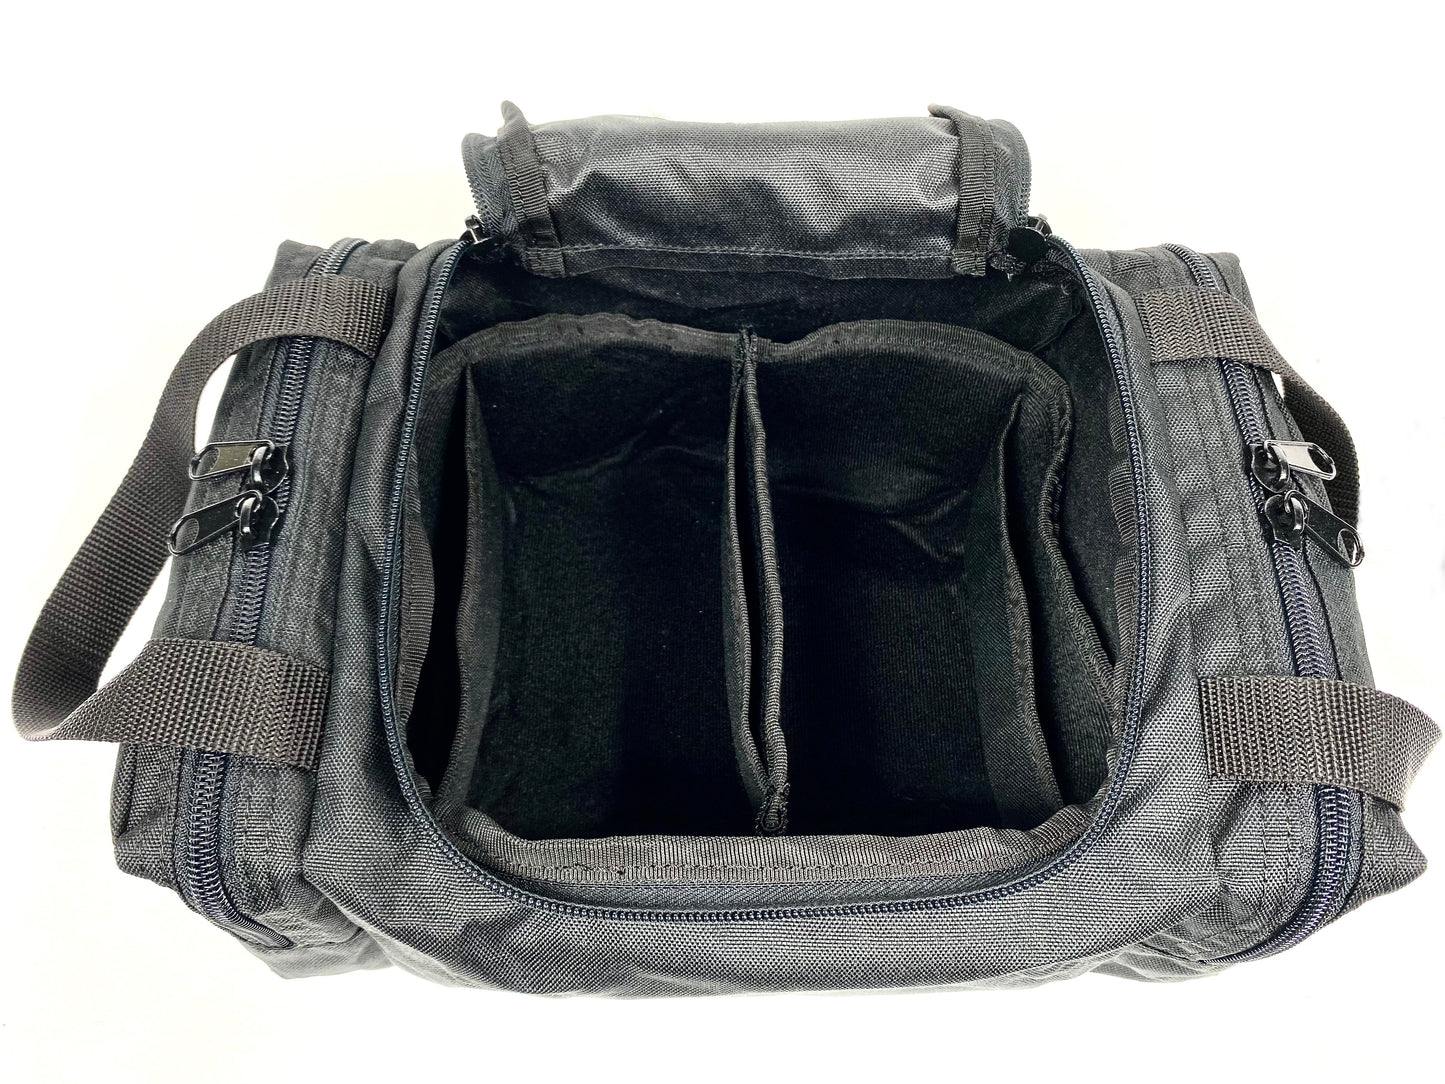 X-FIRE Compact (12"x8"x5.5" inches) EMS First Responder Trauma Essentials Bag (EMPTY)